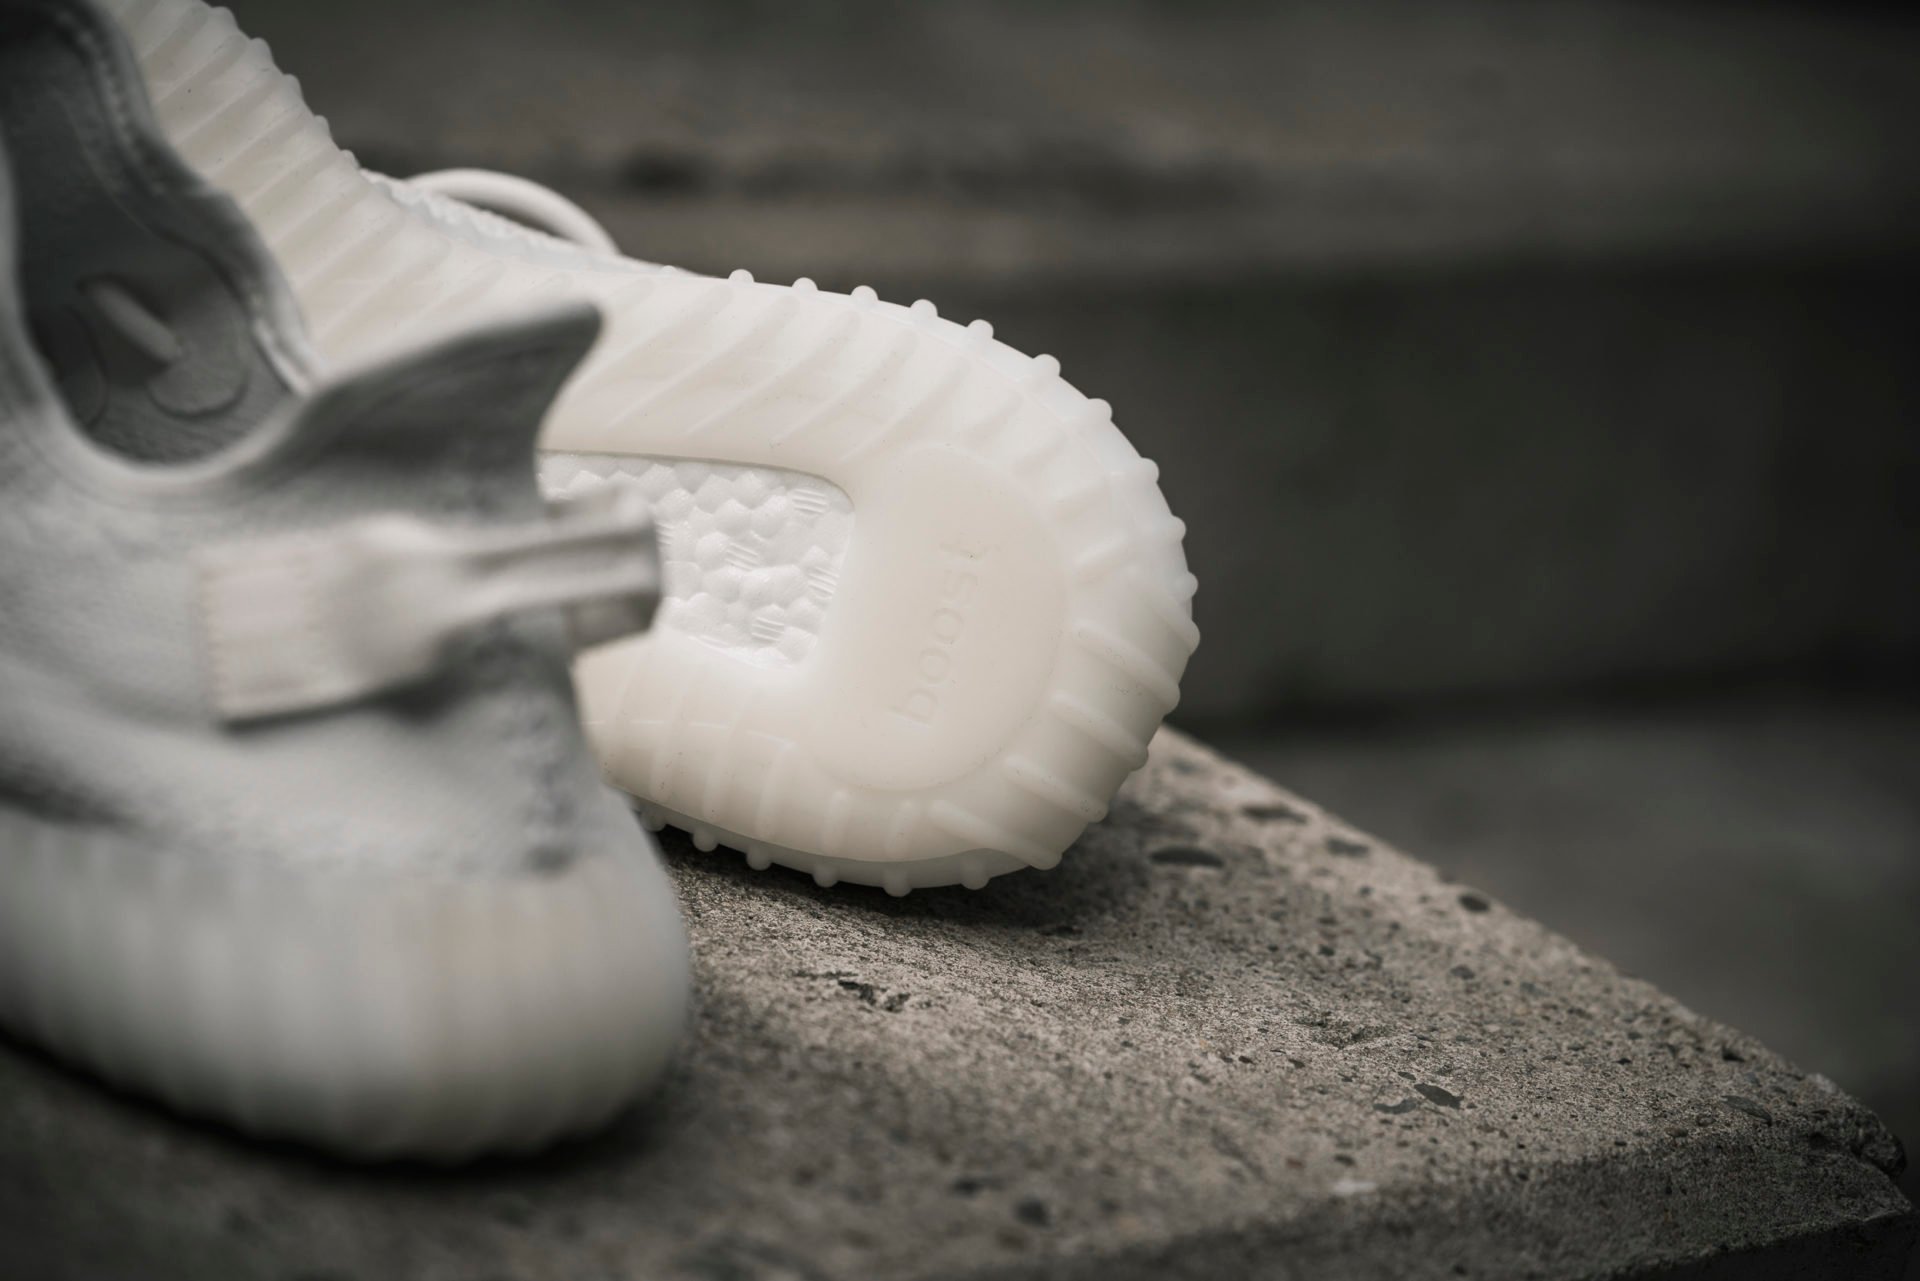 adidas Yeezy Boost 350 V2 "Cream White"